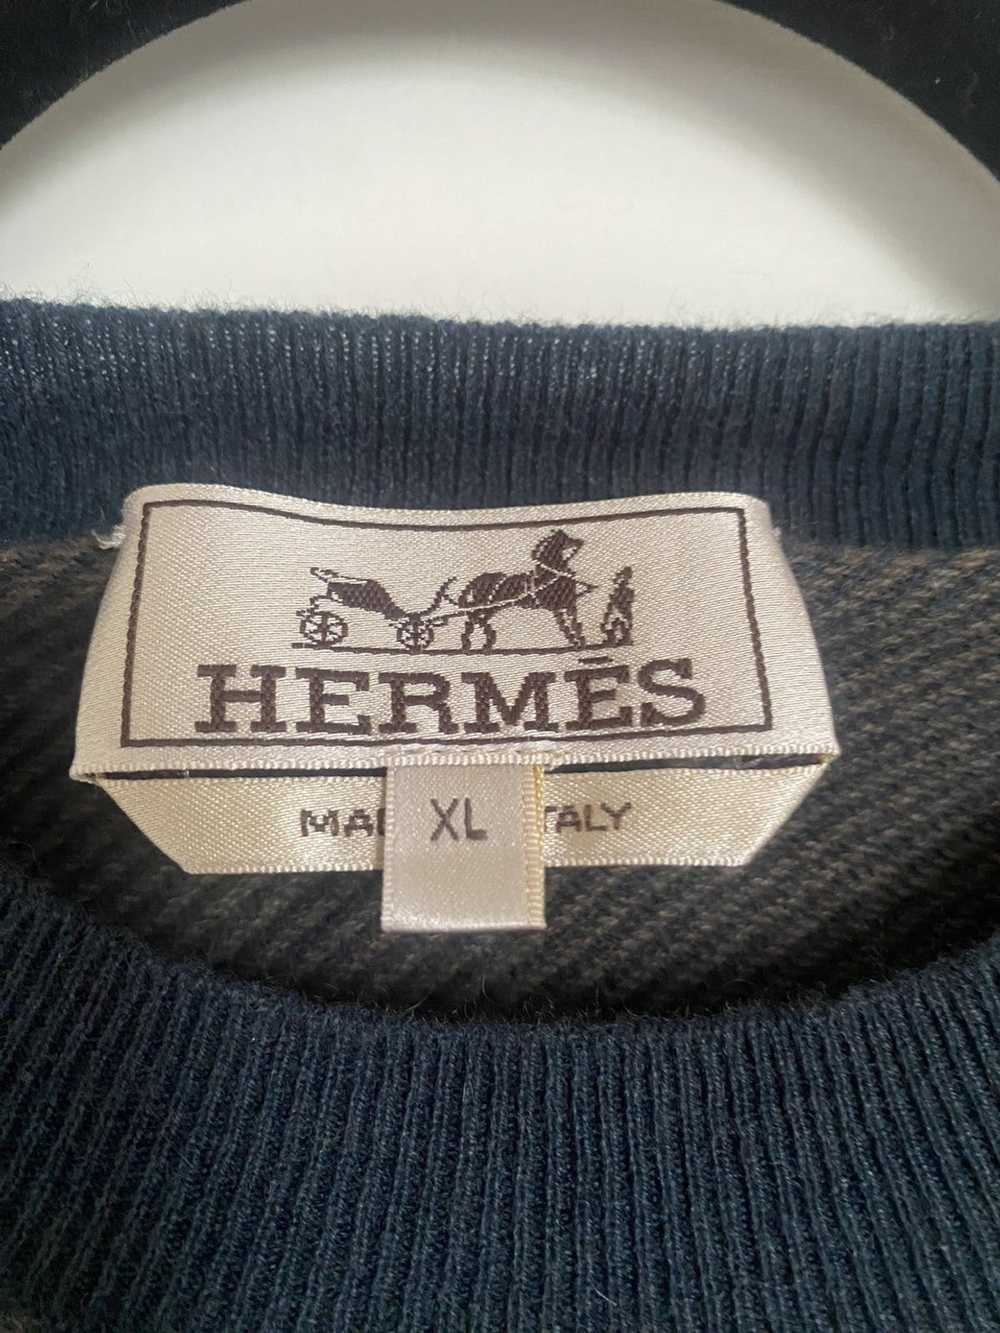 Hermes Hermes knit Cashmere Sweater - image 5